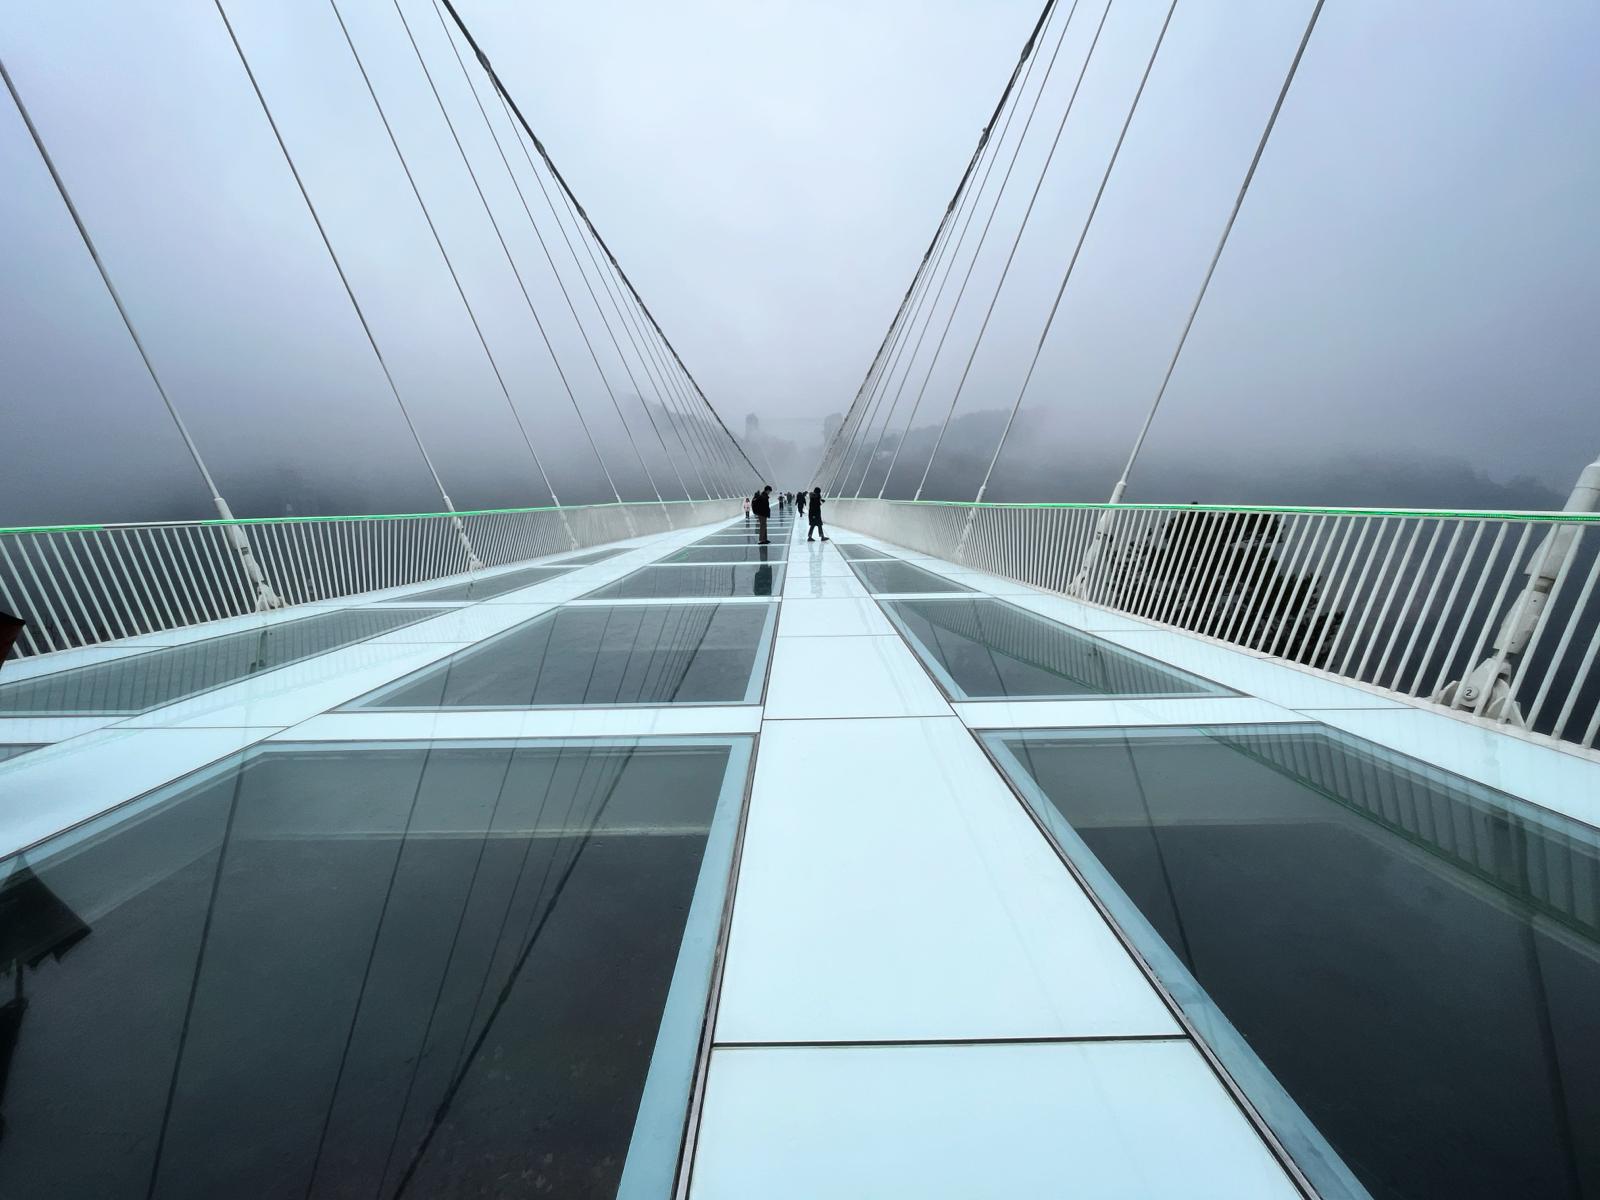 How to get to Zhangjiajie Glass Bridge – the world’s highest and longest skywalk